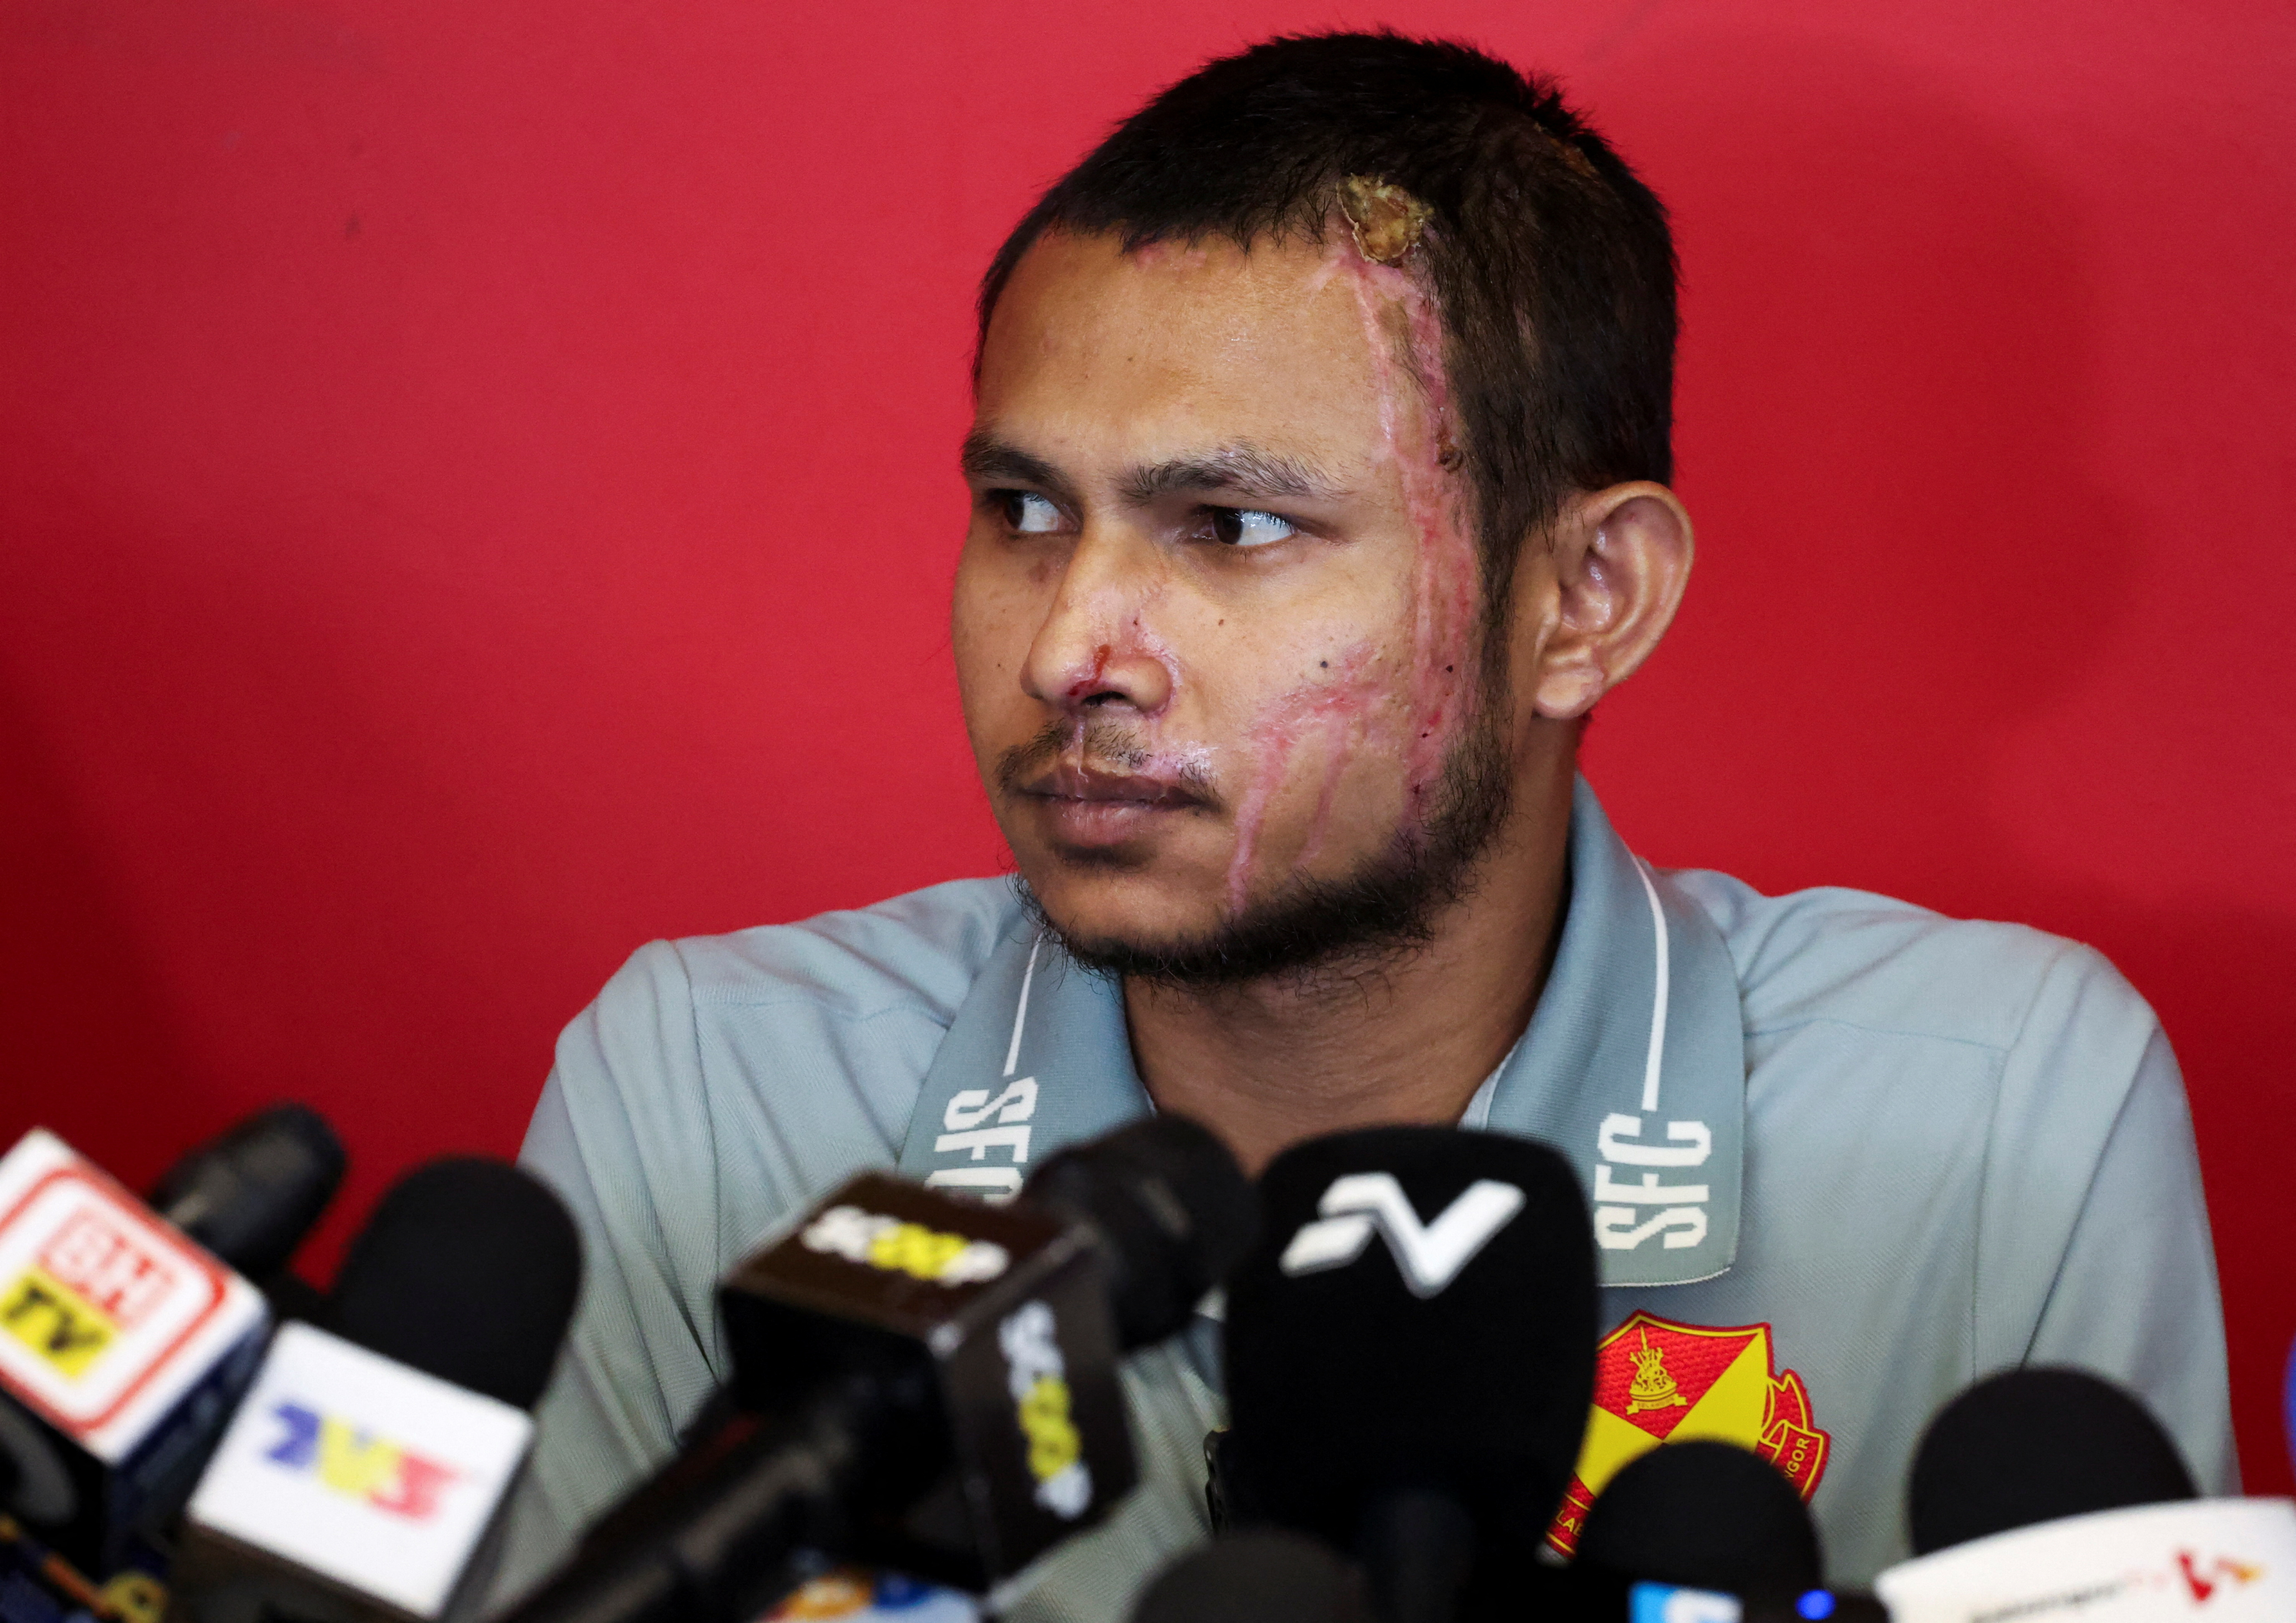 Soccer-Malaysian footballer Faisal calls for justice after acid attack